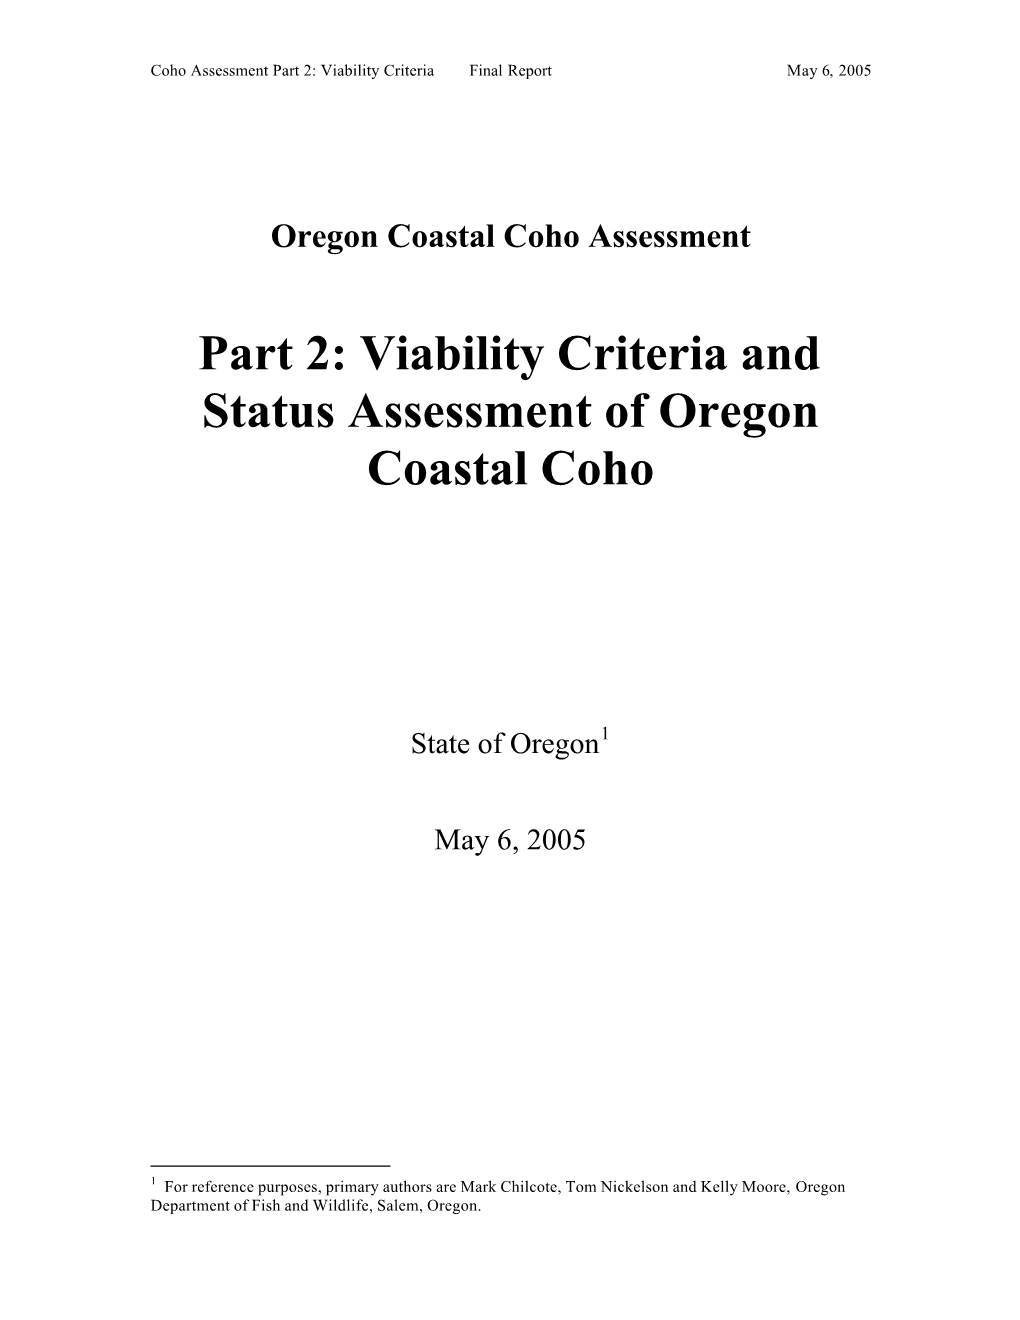 Viability Criteria and Status Assessment of Oregon Coastal Coho